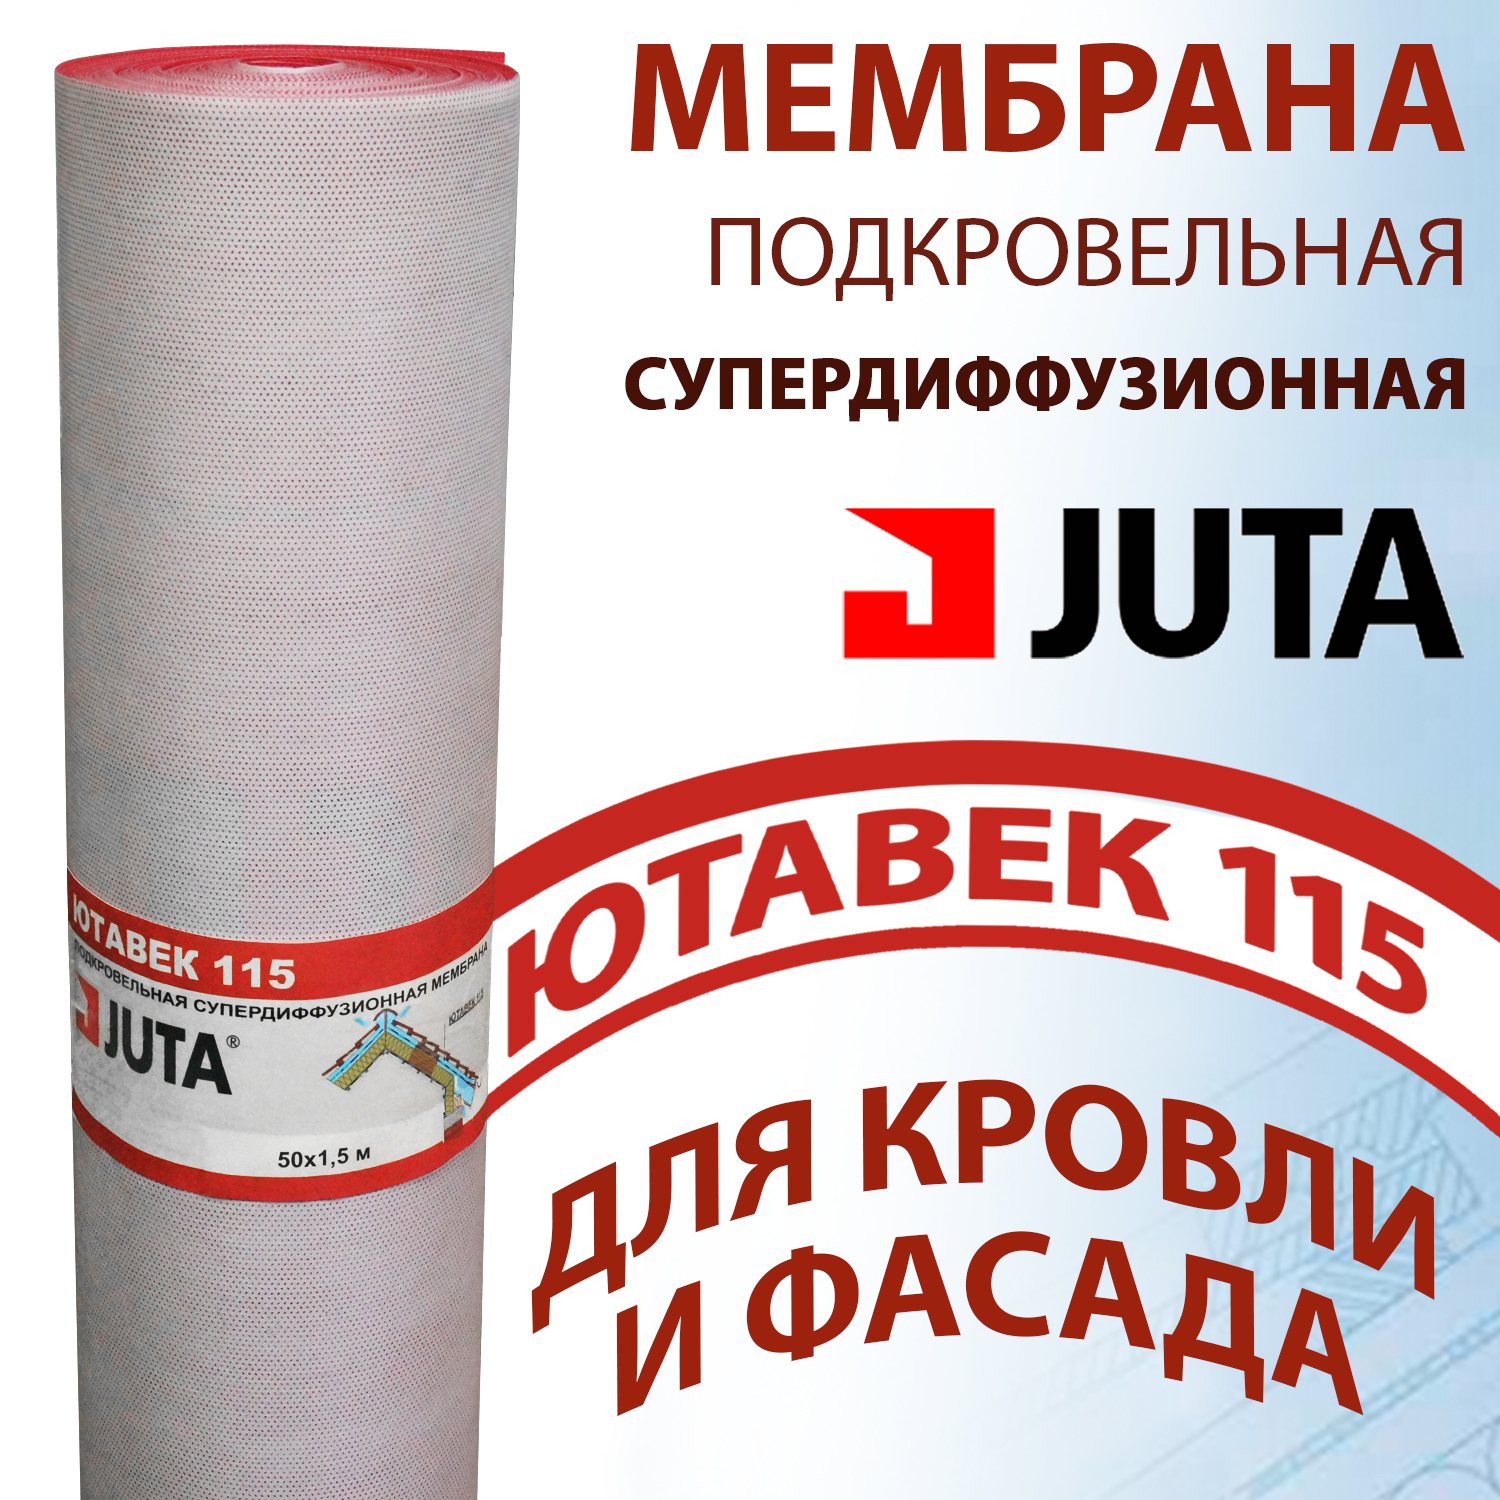 Мембрана супердиффузионная Juta JTK115 Jutavek, 1.5х50 м, 75 кв. м